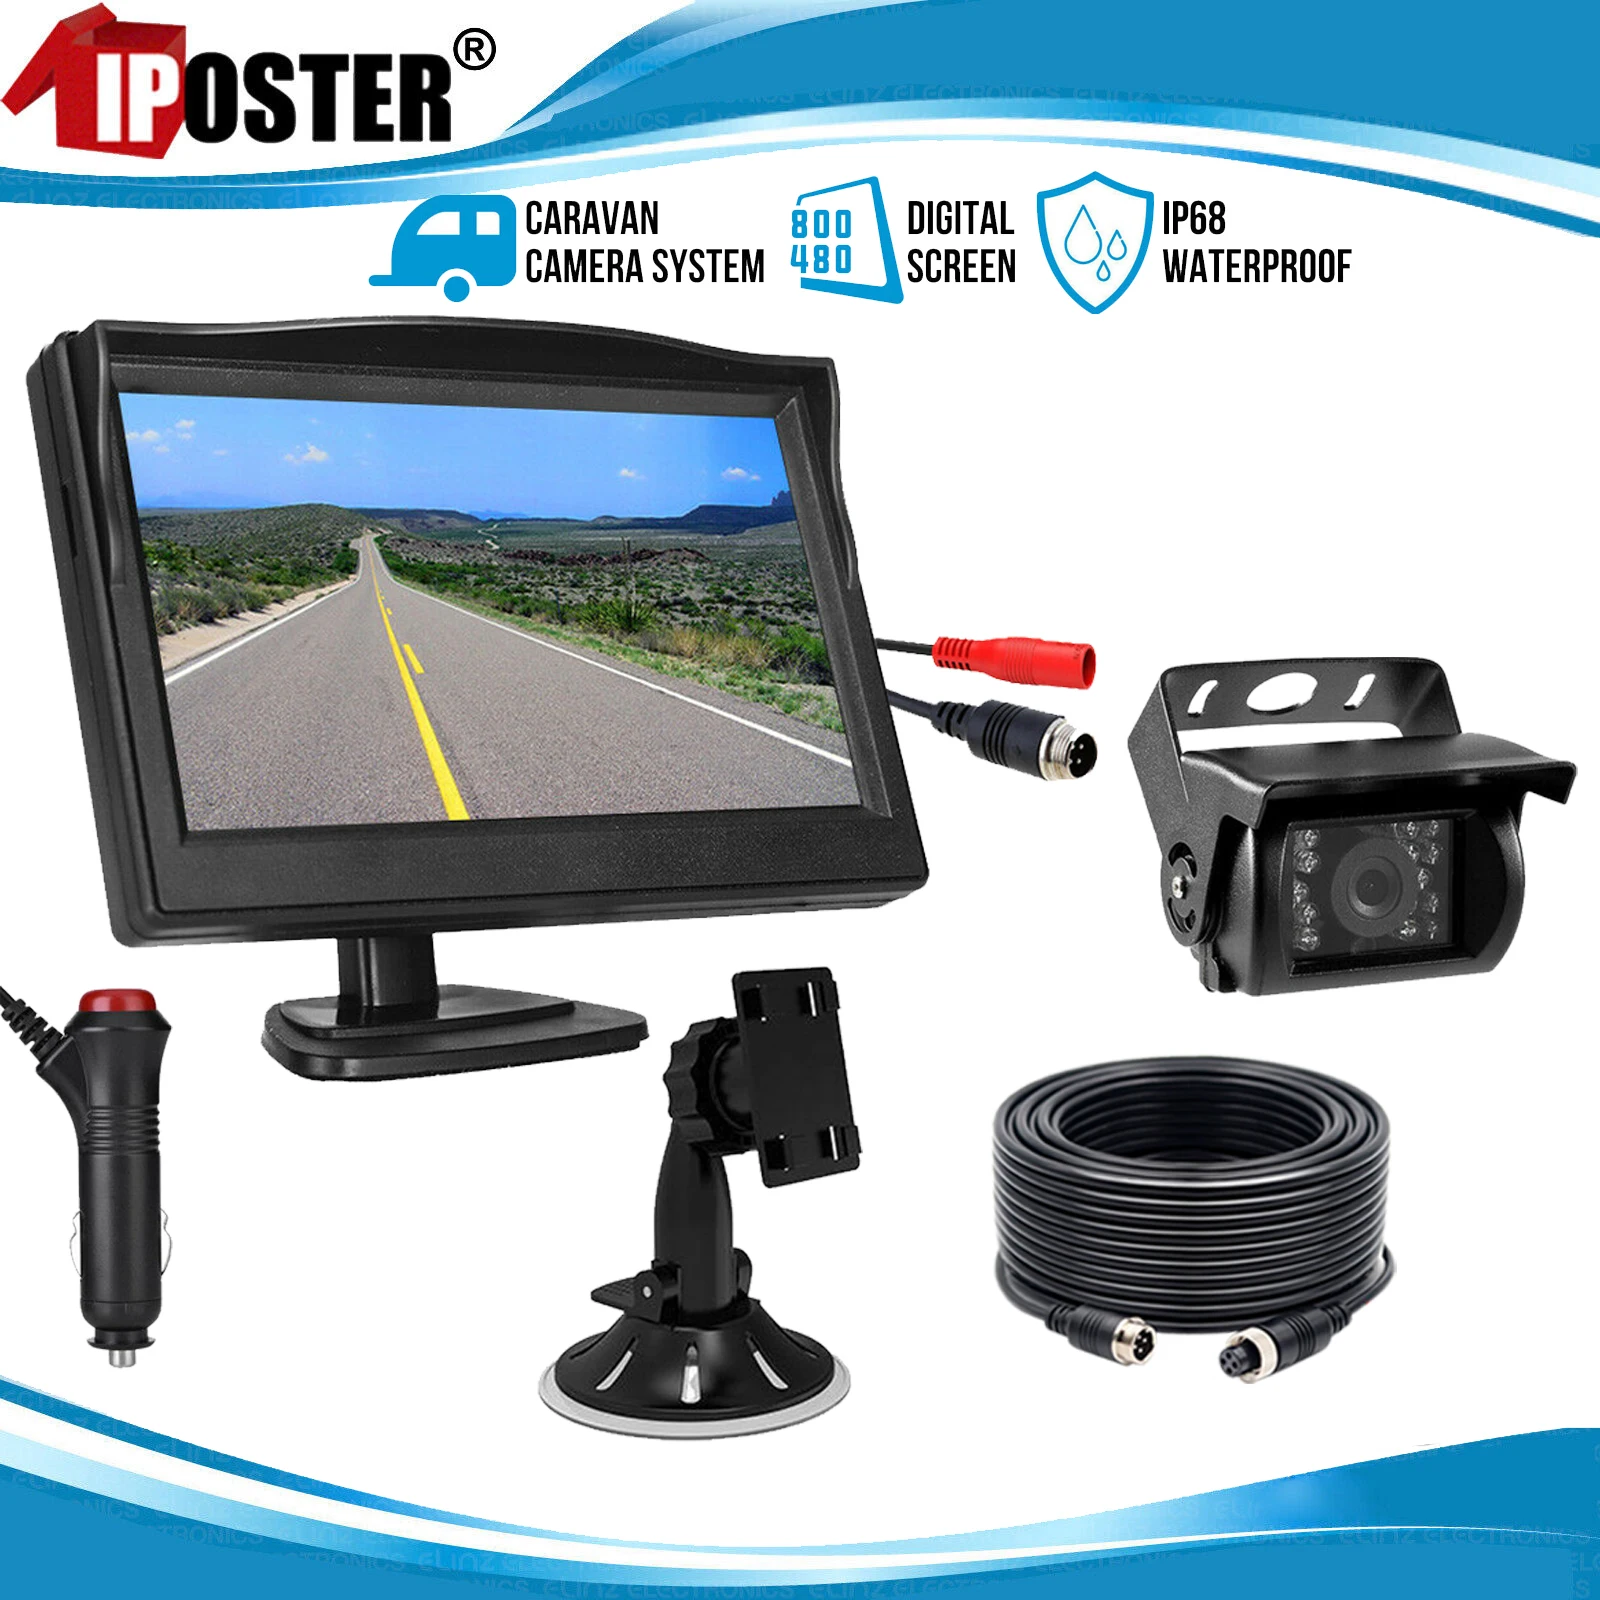 

iPoster 5 Inch LCD Screen Monitor with Charger Plug and Play + 4PIN Rear View Reversing Camera 12-24v Caravan Rv Van